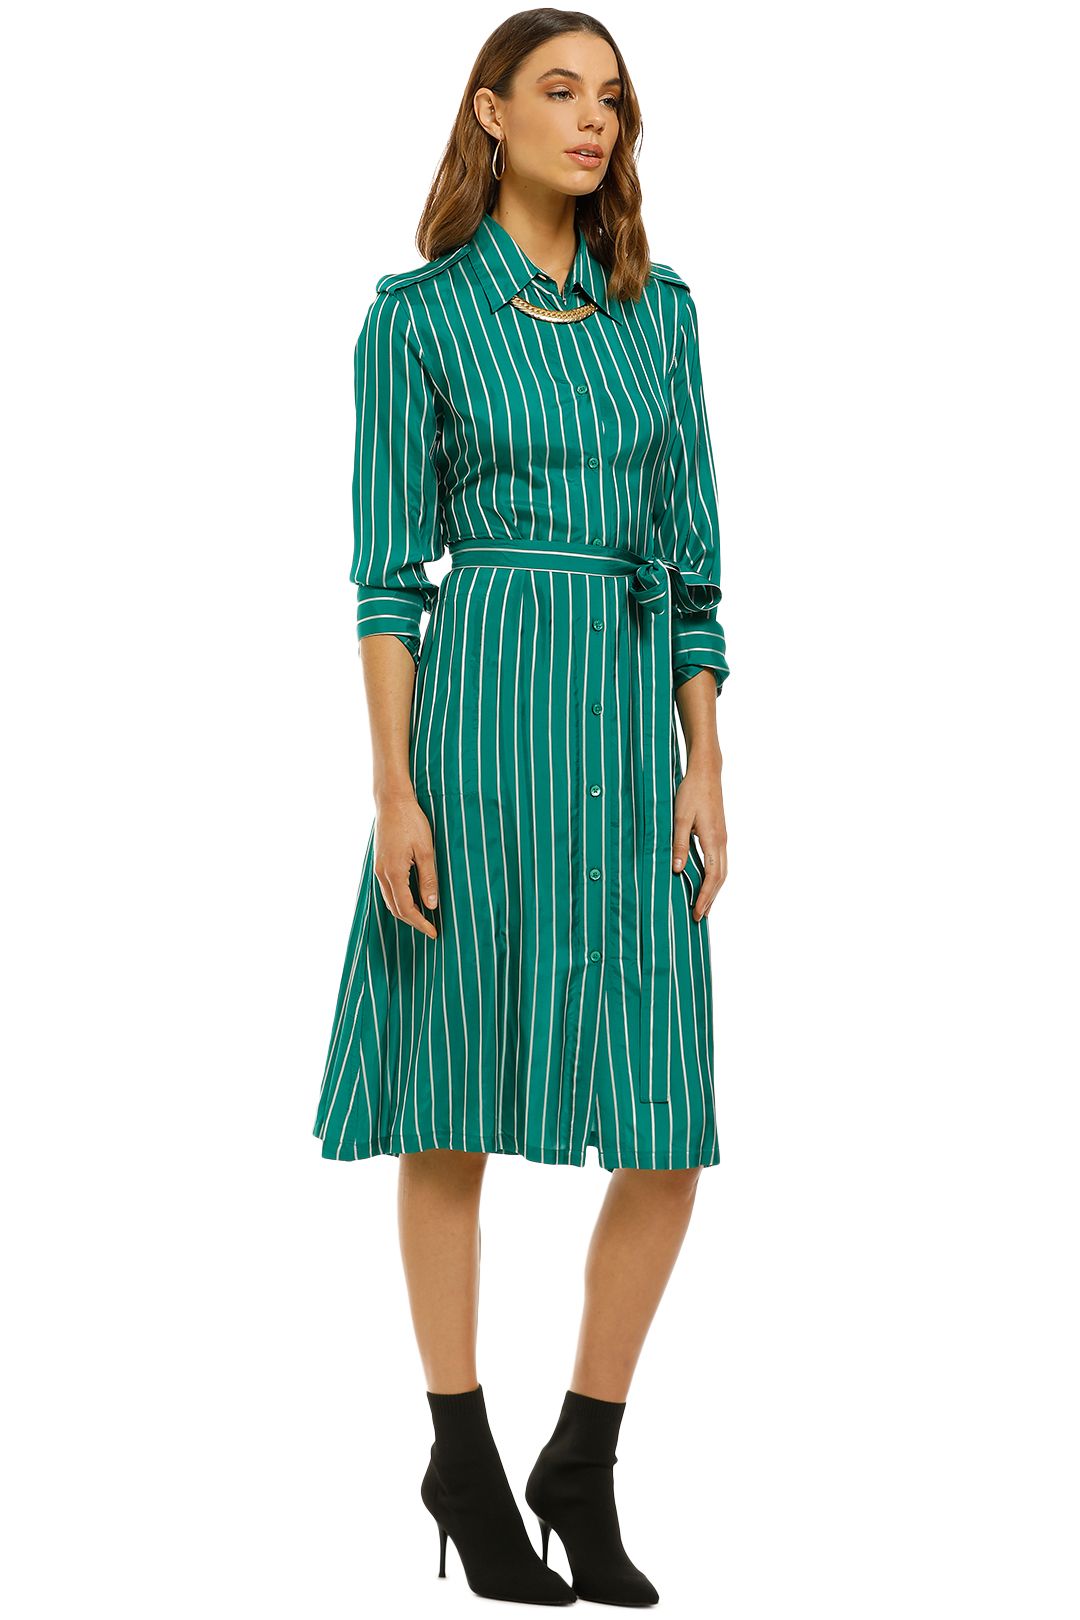 Scanlan Theodore - Stripe Shirt Dress - Emerald - Side